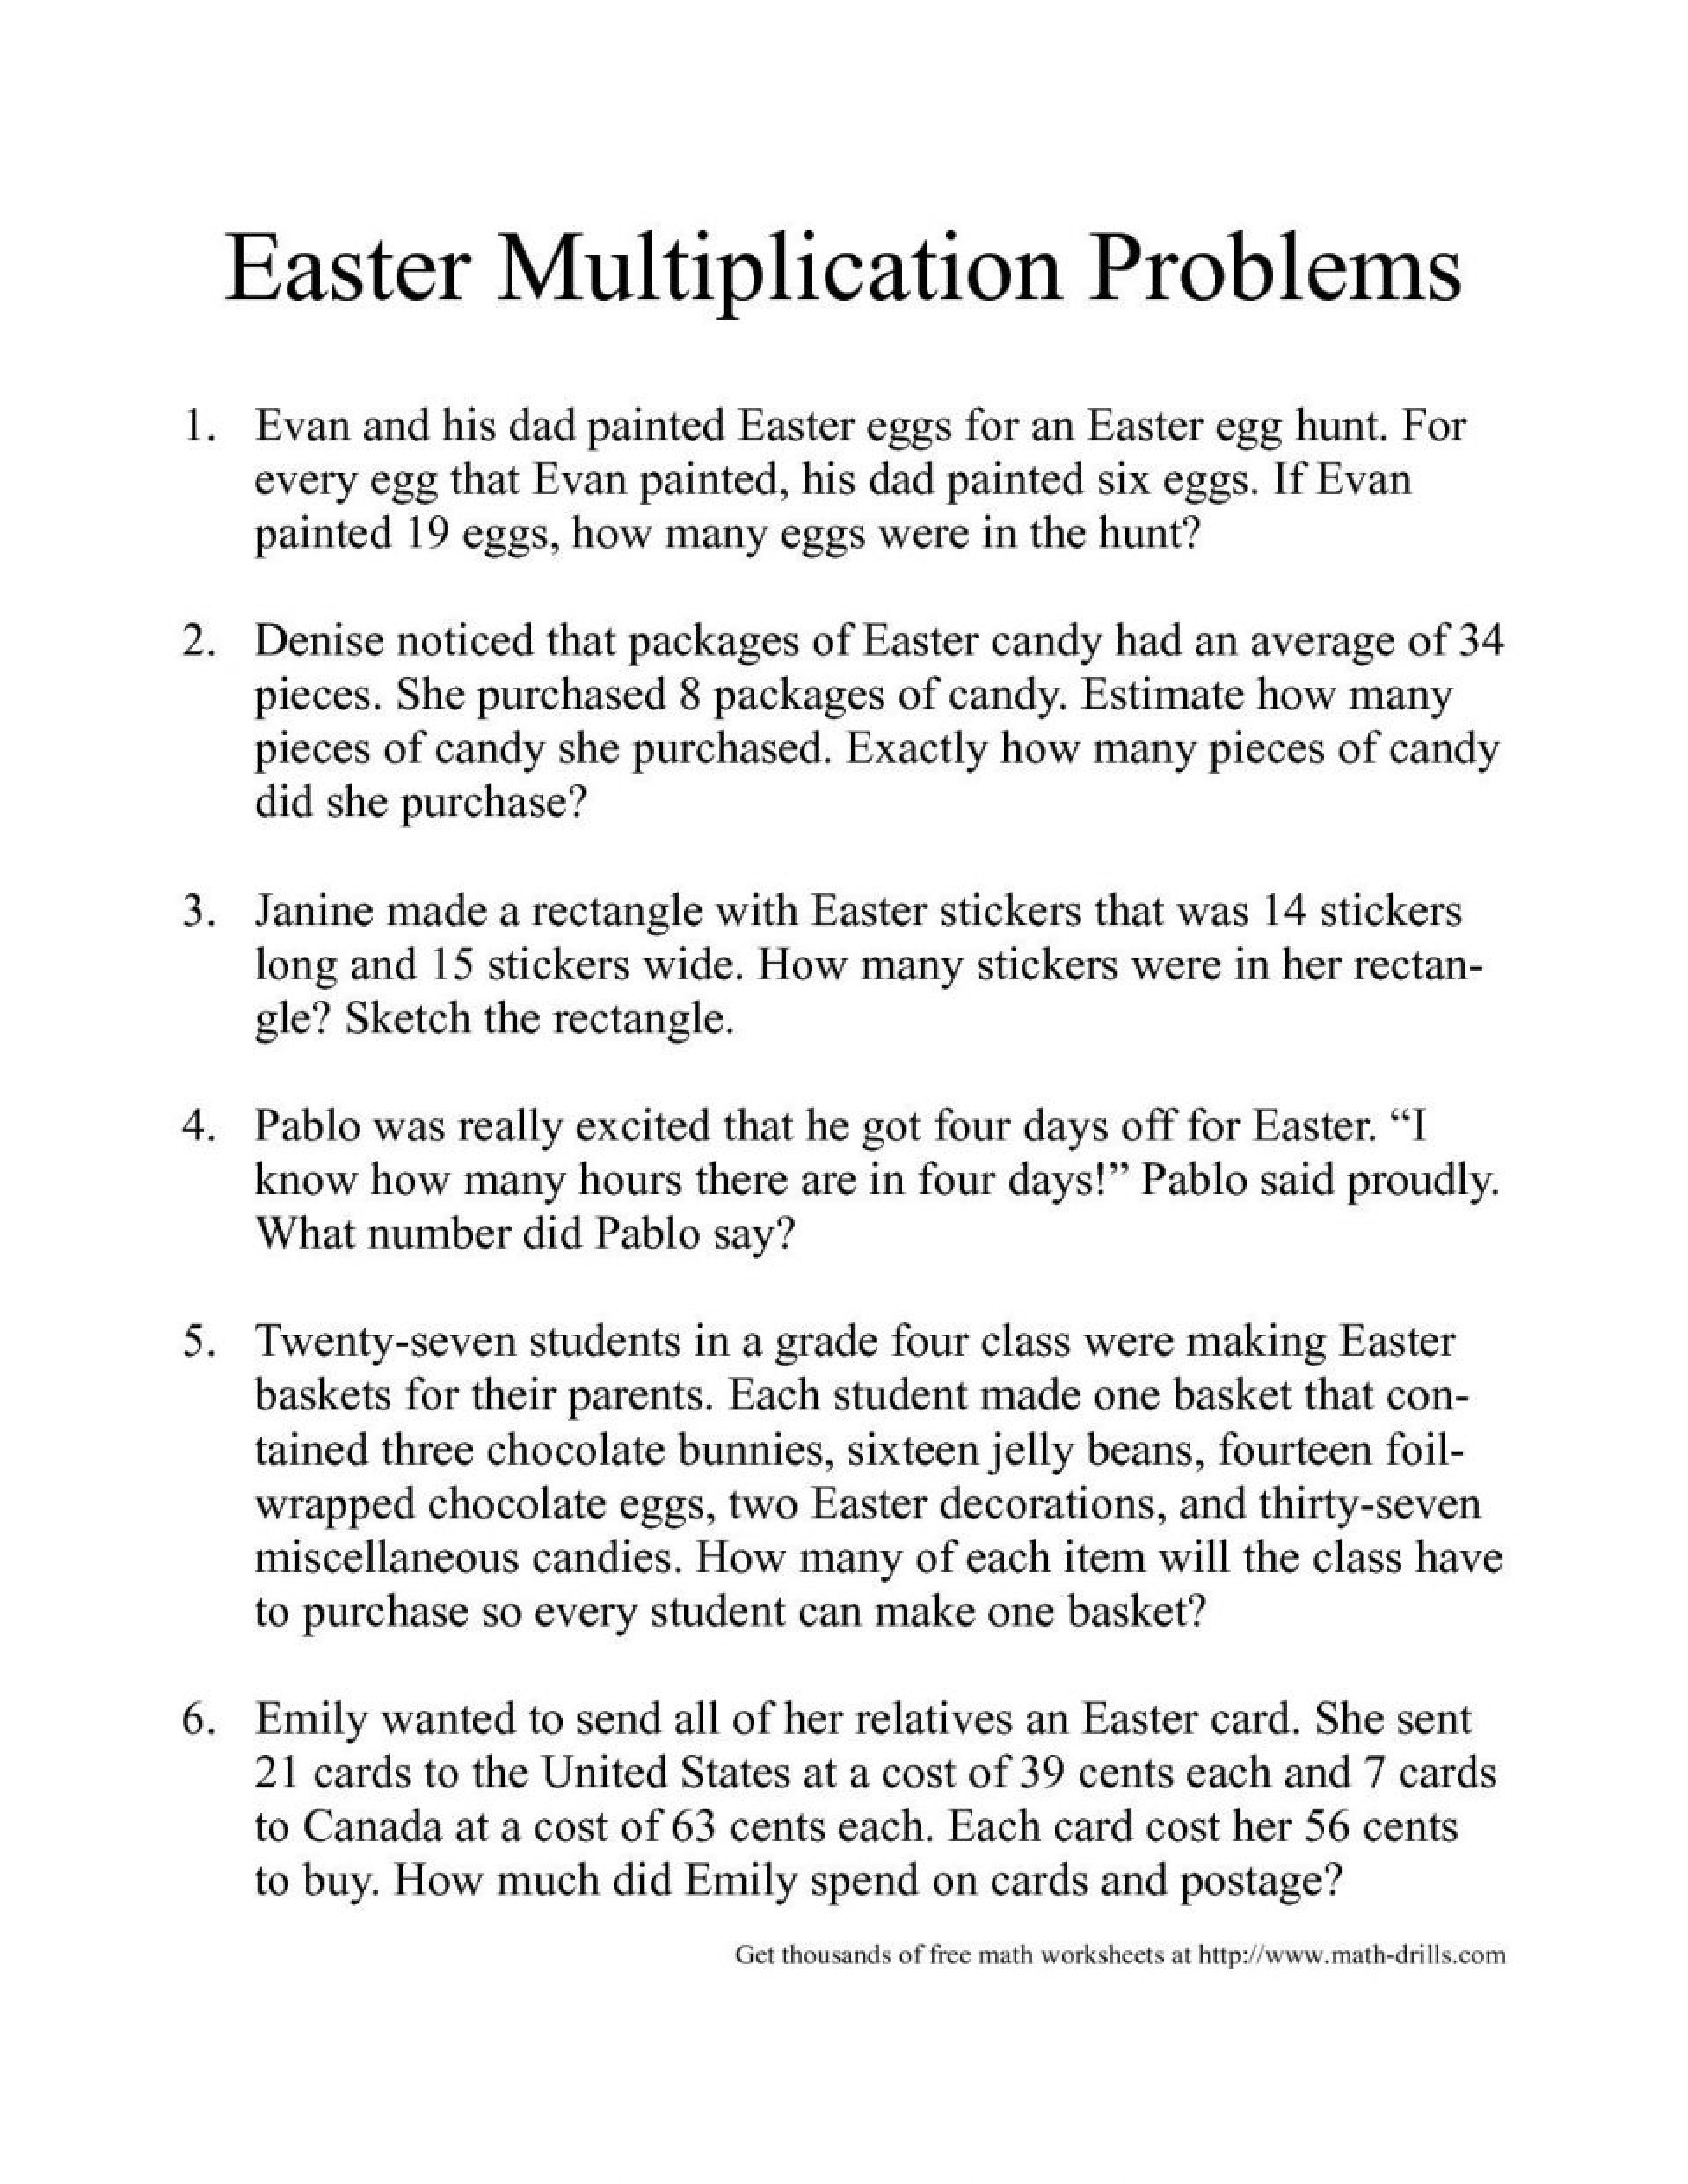 1st-grade-math-word-problems-worksheets-pdf-hd-png-download-kindpng